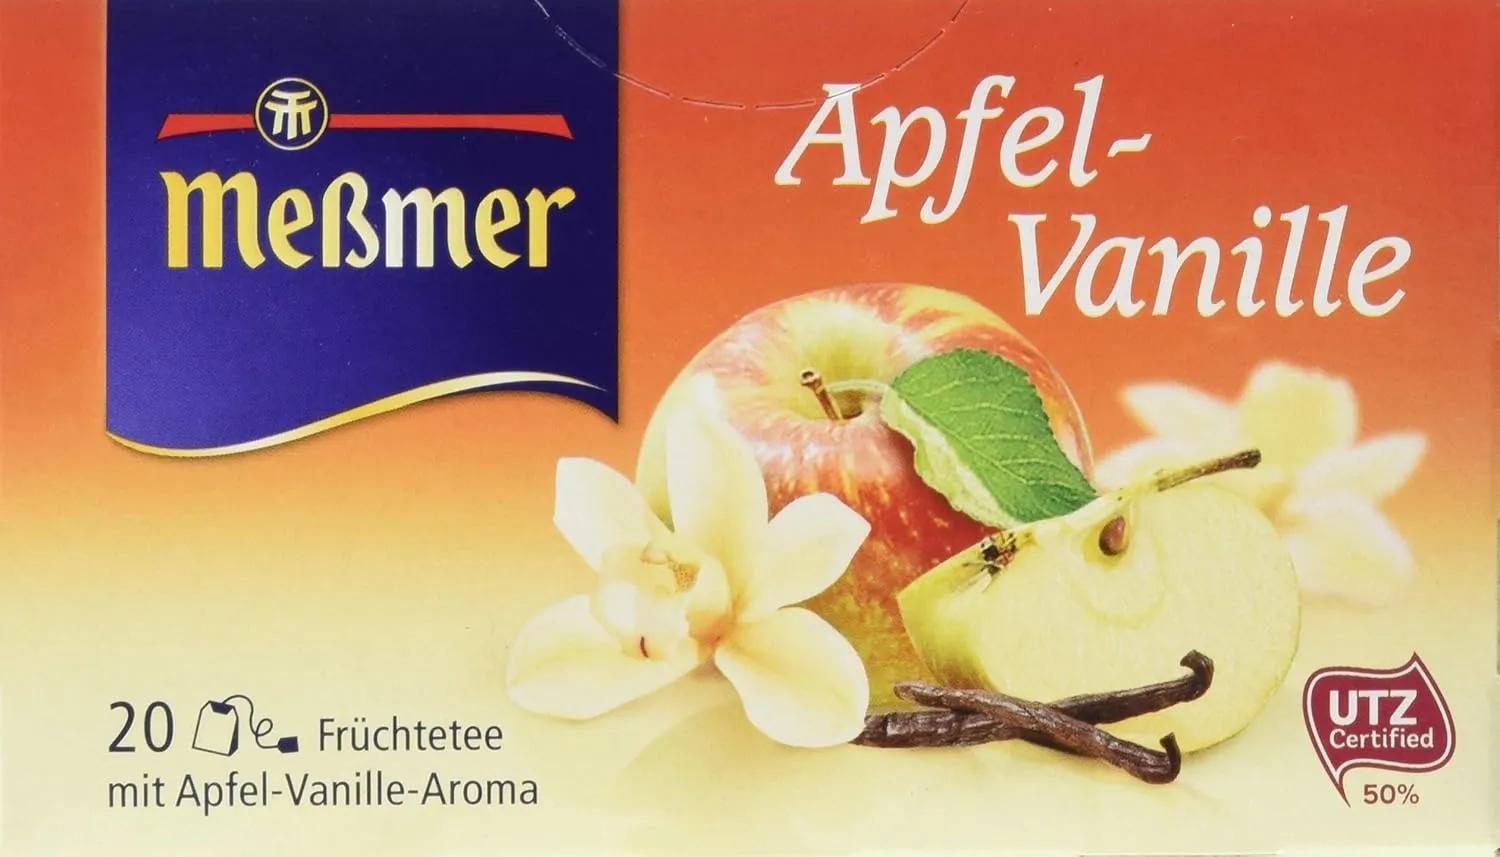 Meßmer Apfel-Vanille, 20 Beutel, 10er Pack (10 x 55 g): Amazon.de ...